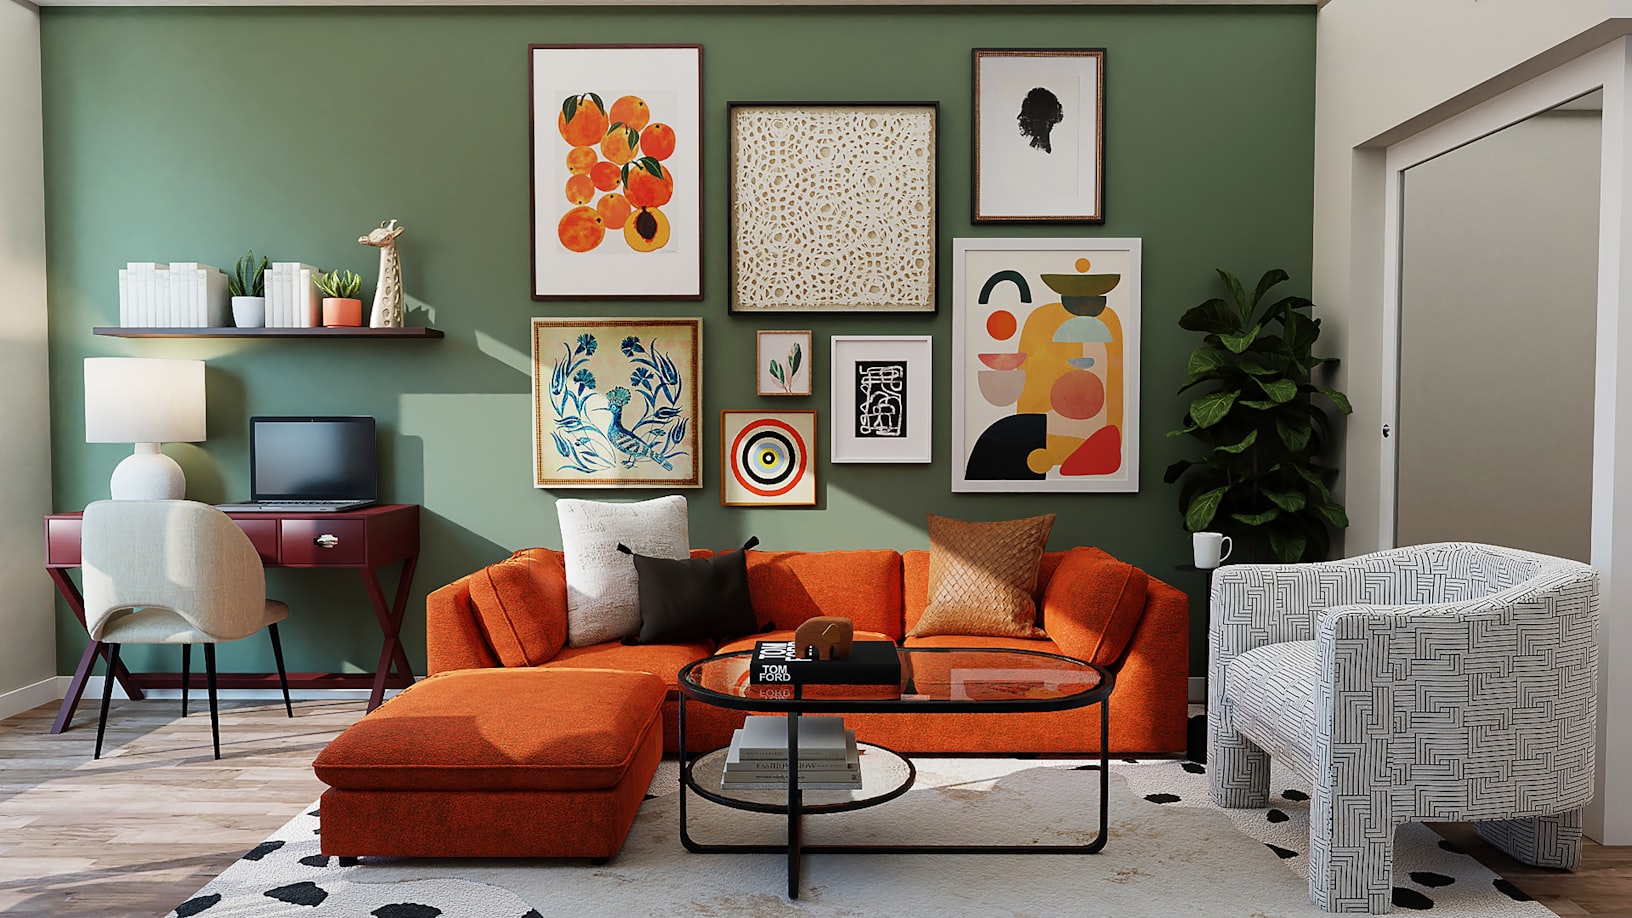 orange sofa photo by Spacejoy via unsplash.com - Wood and glass coffee table ideas